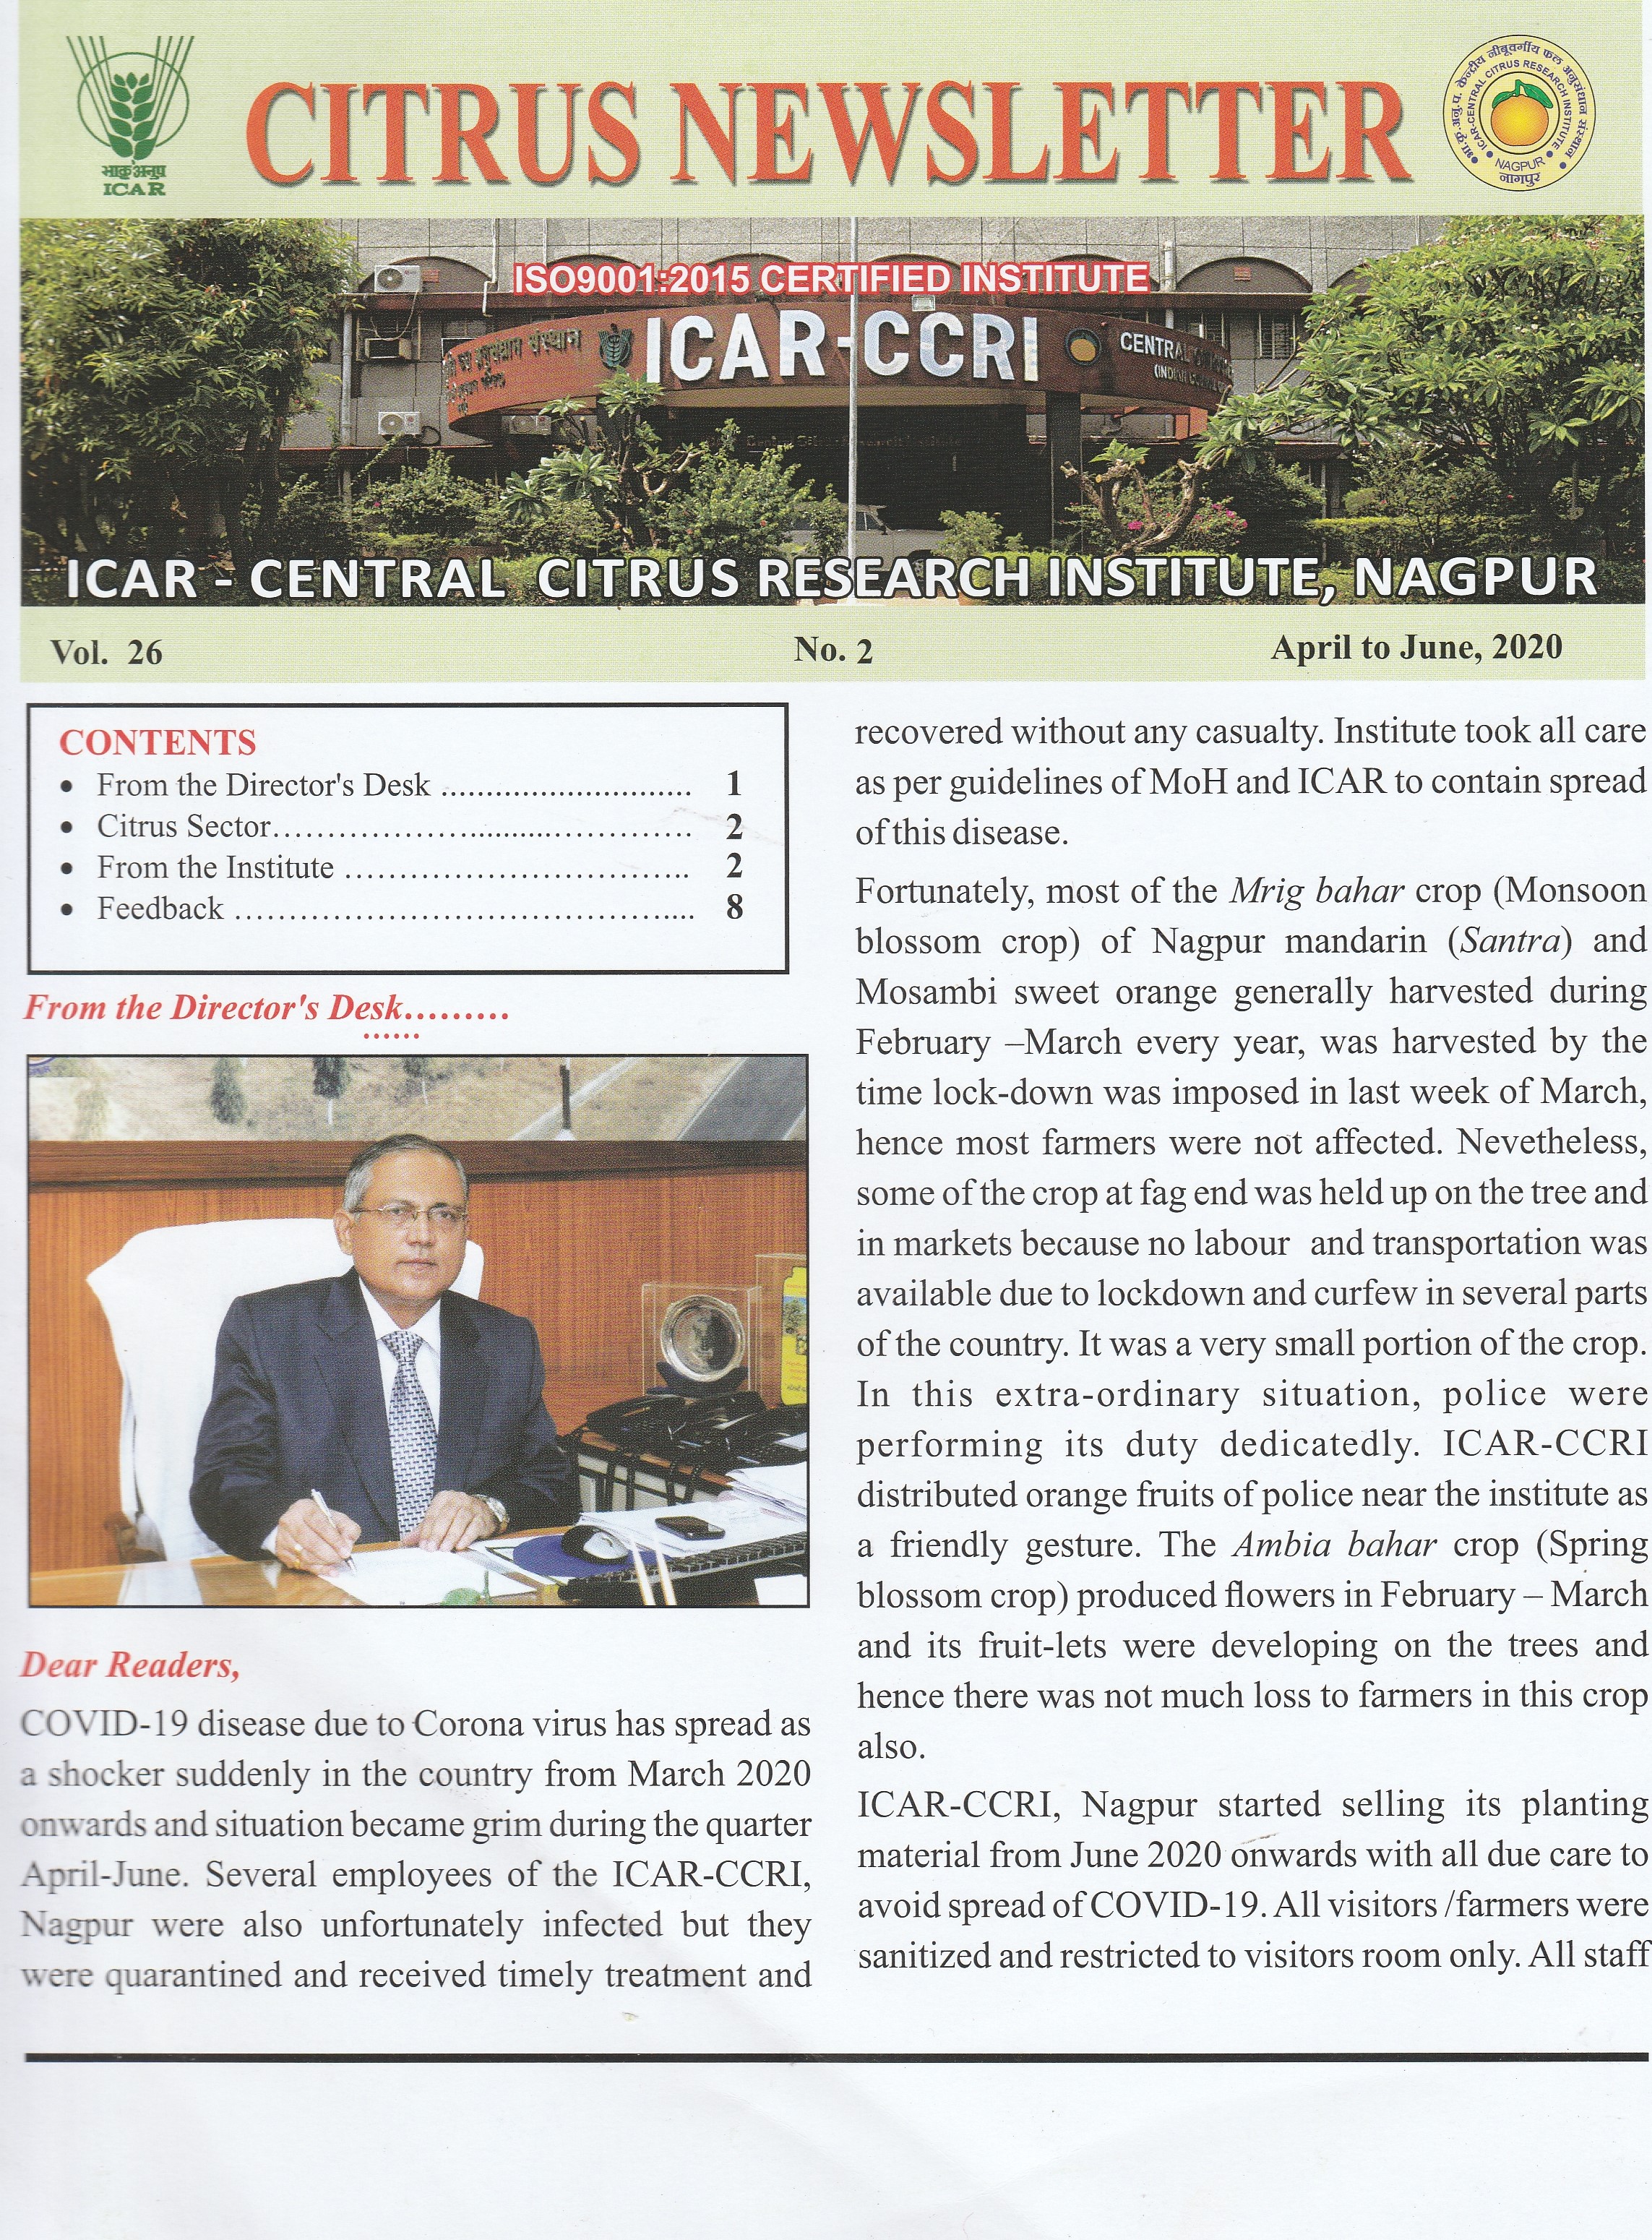 ICAR-CCRI